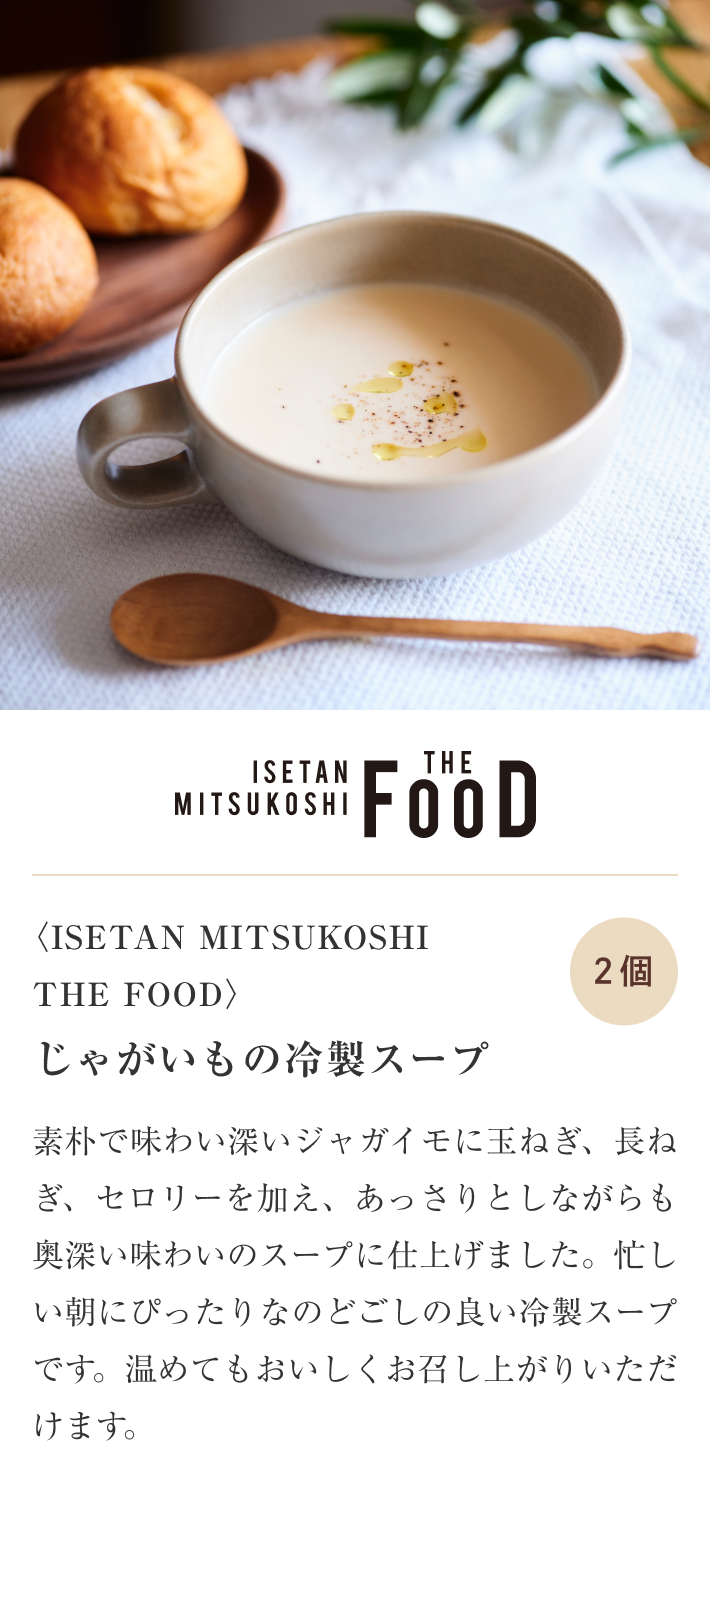 ISETAN MITSUKOSHI THE FOOD